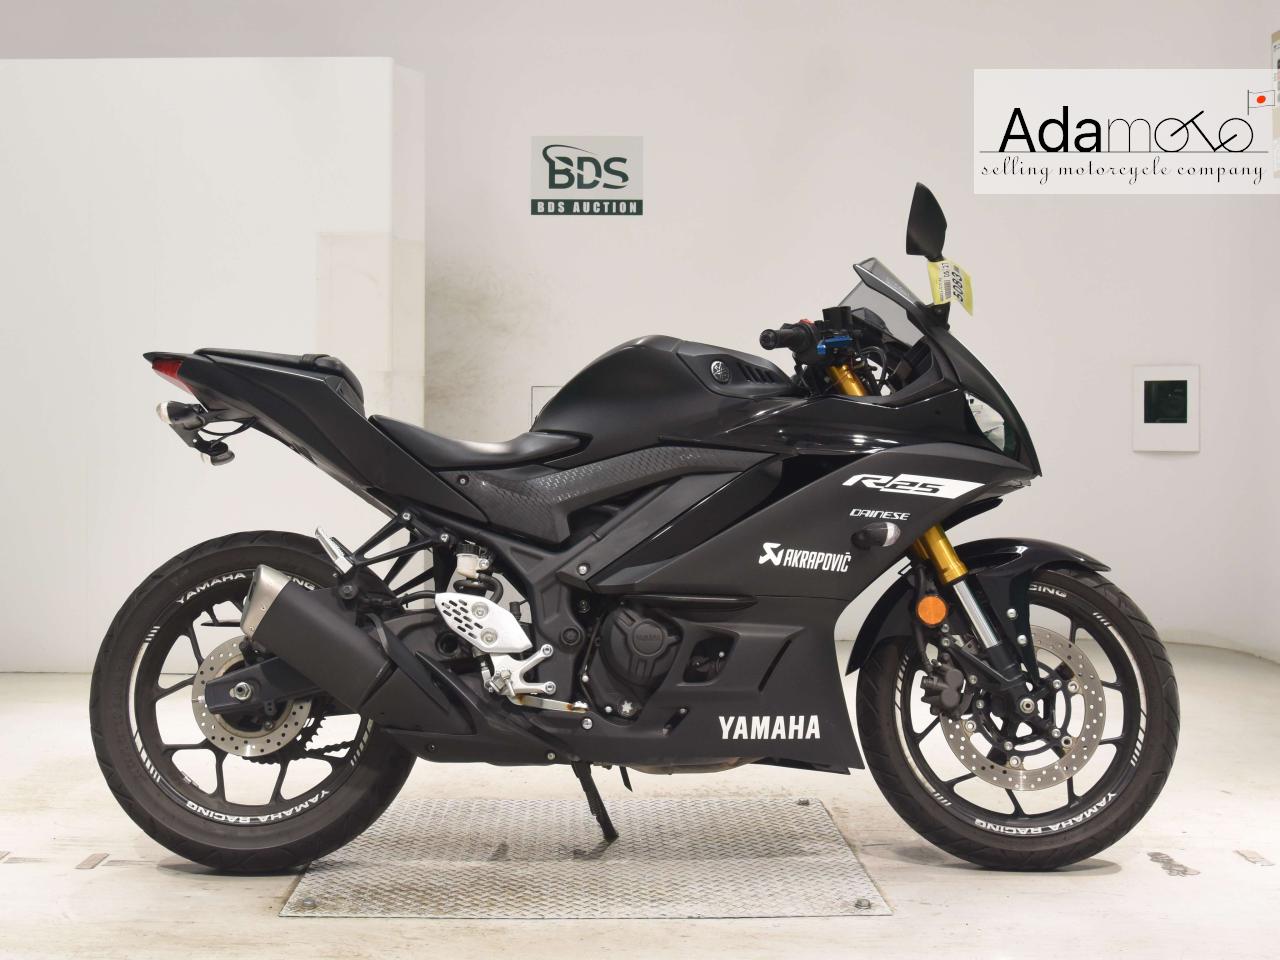 Yamaha YZF R25 - Adamoto - Motorcycles from Japan